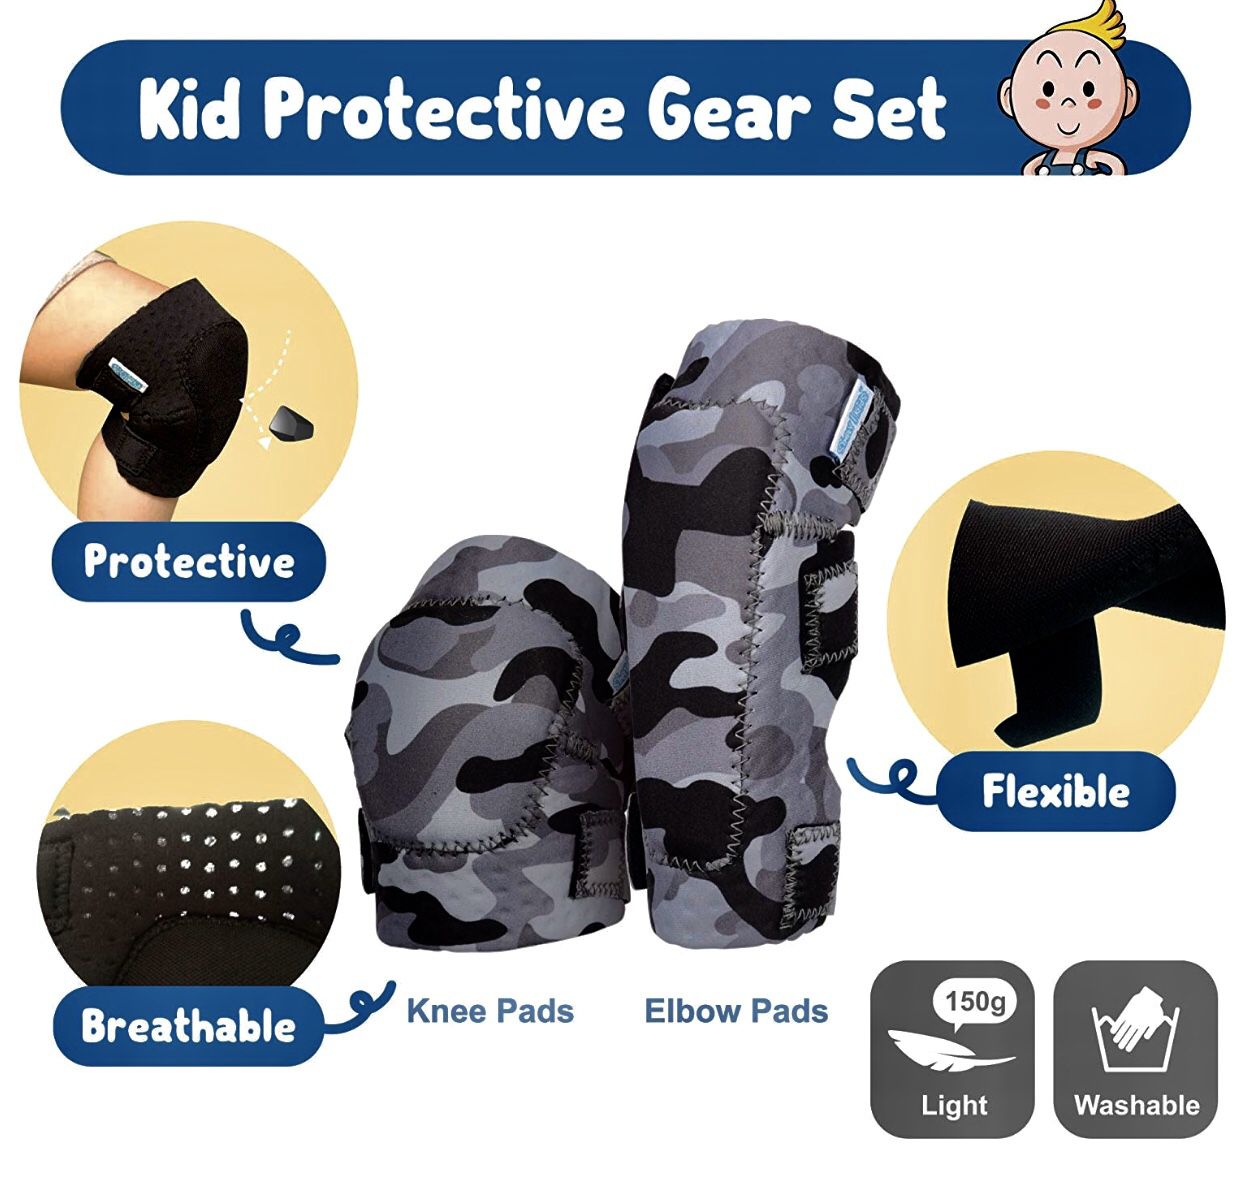 Kids bike pads and gloves